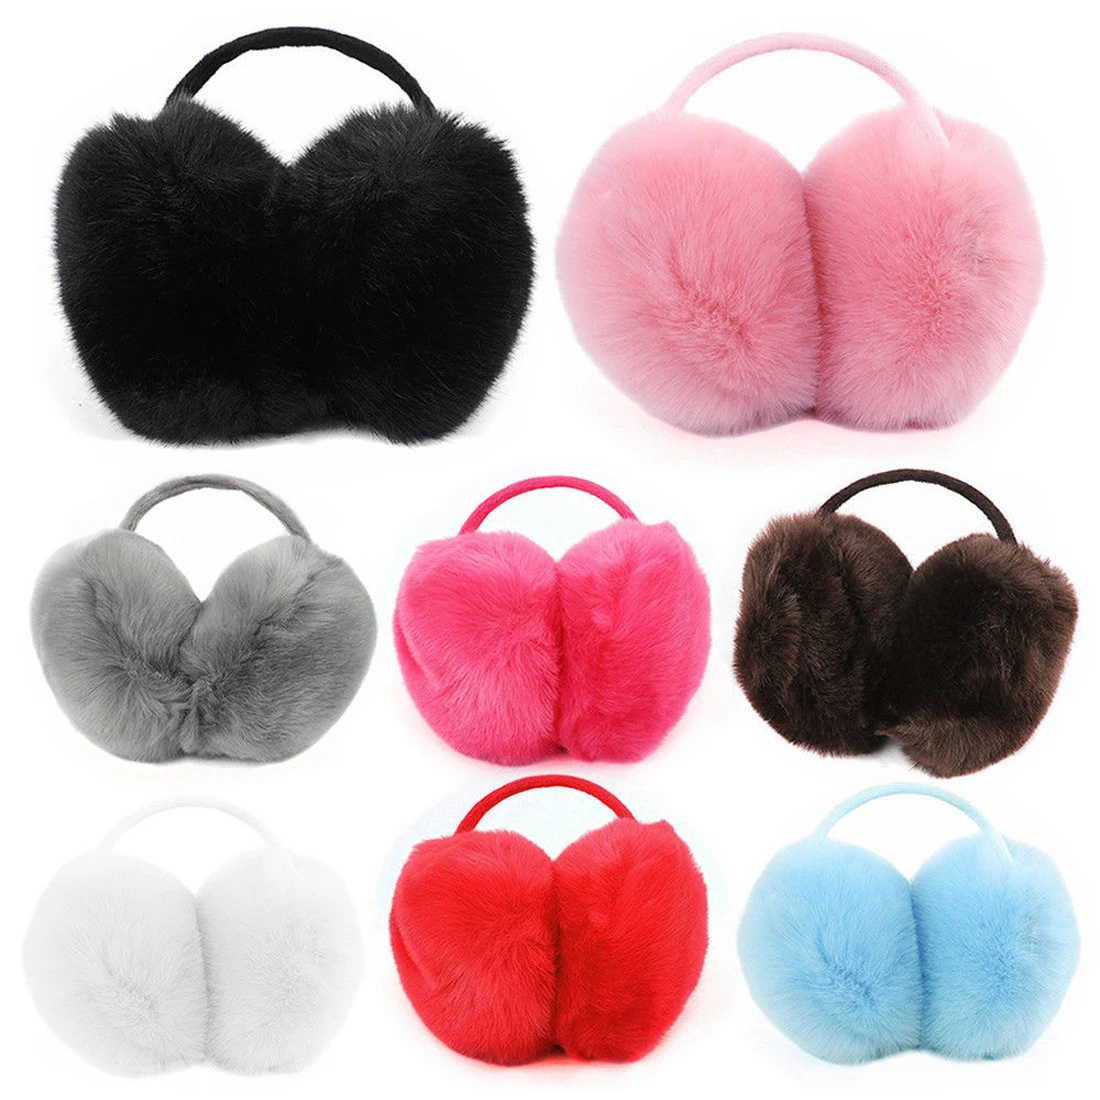 I Want A New Boyfriend Winter Earmuffs Ear Warmers Faux Fur Foldable Plush Outdoor Gift